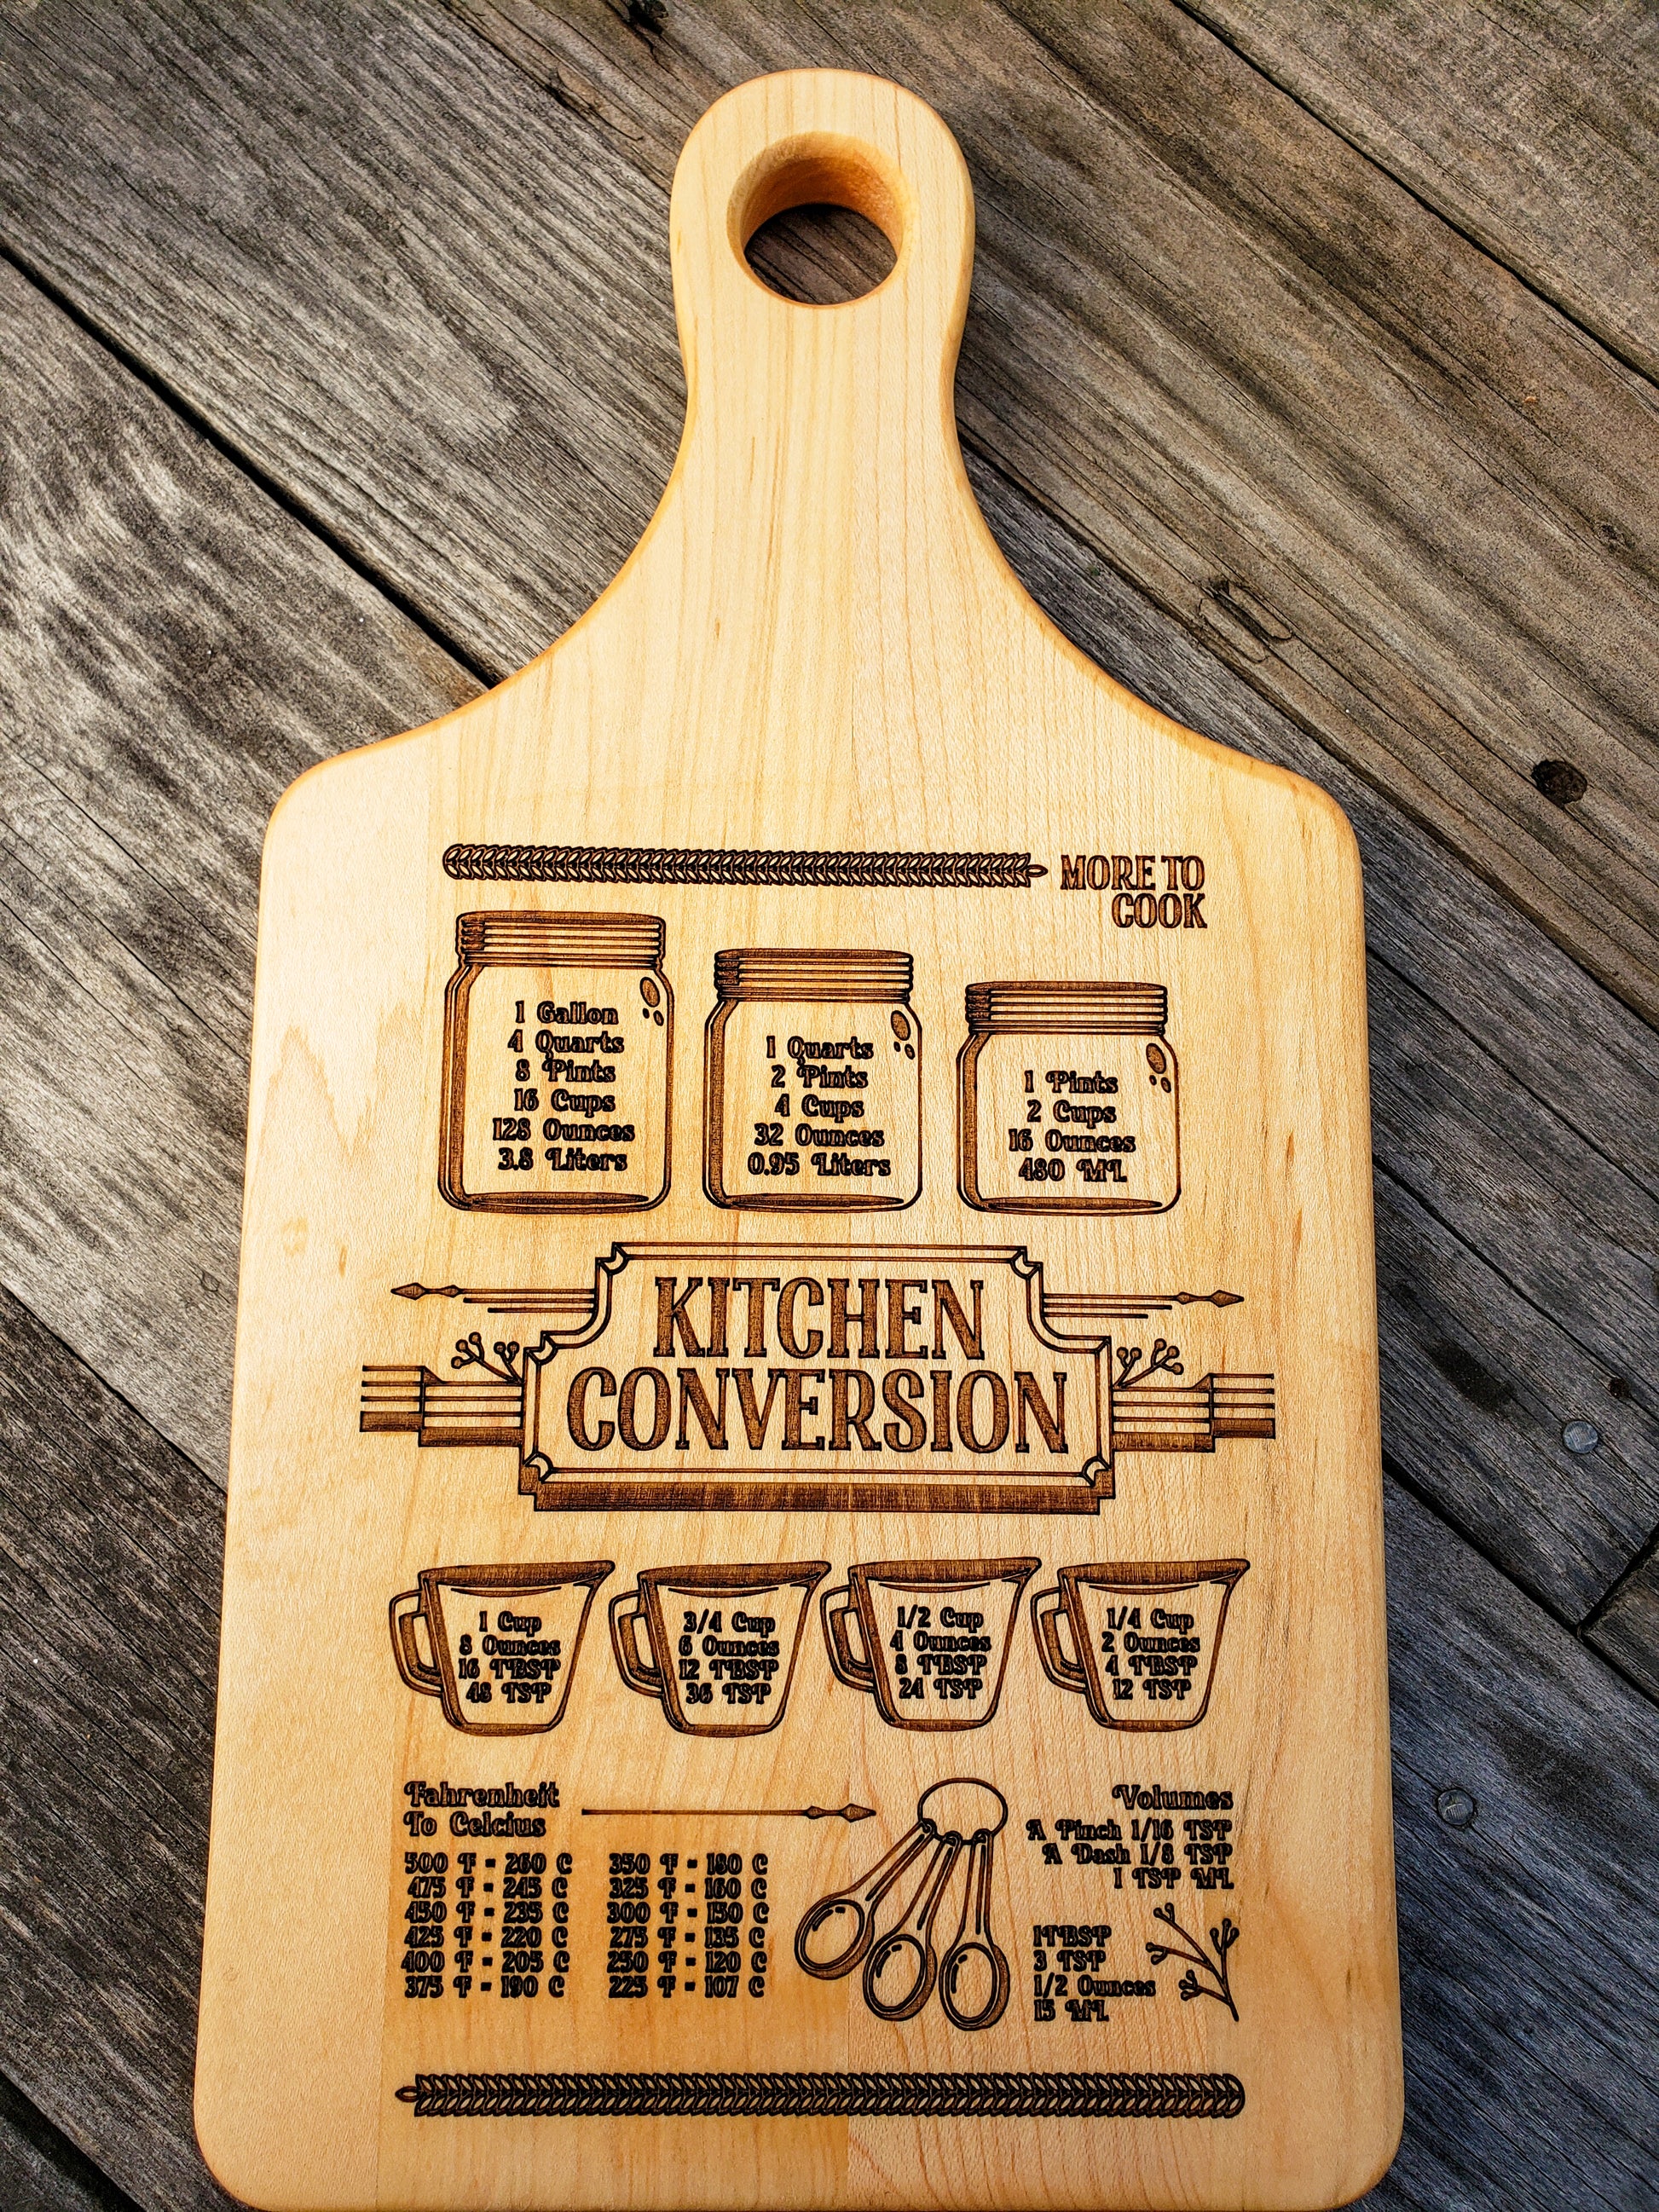 Wooden Cutting Board (15”x7”) | Kitchen Decor | Kitchen Conversion Chart |  Cheese Board